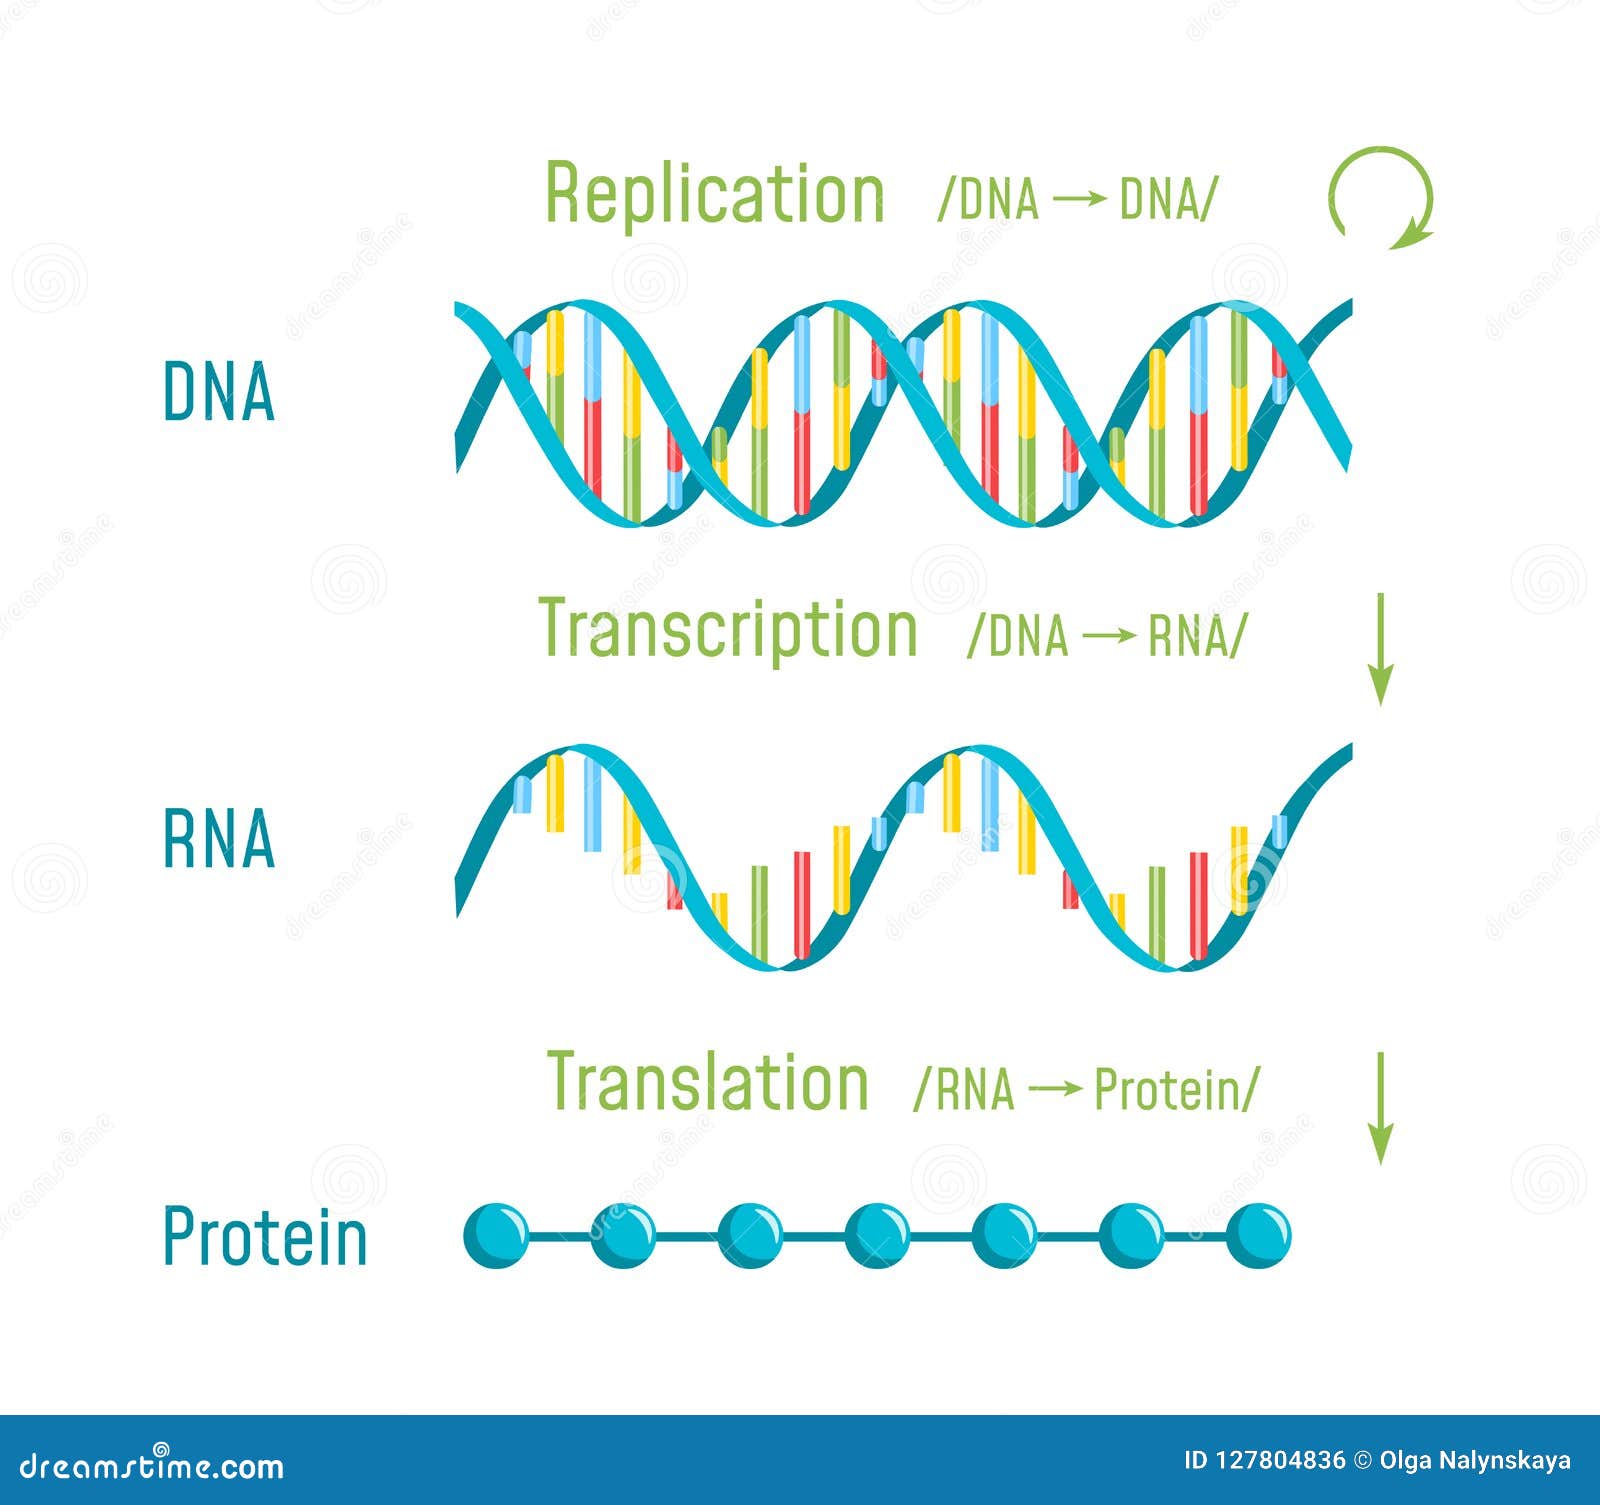 dna replication, transcription and translation